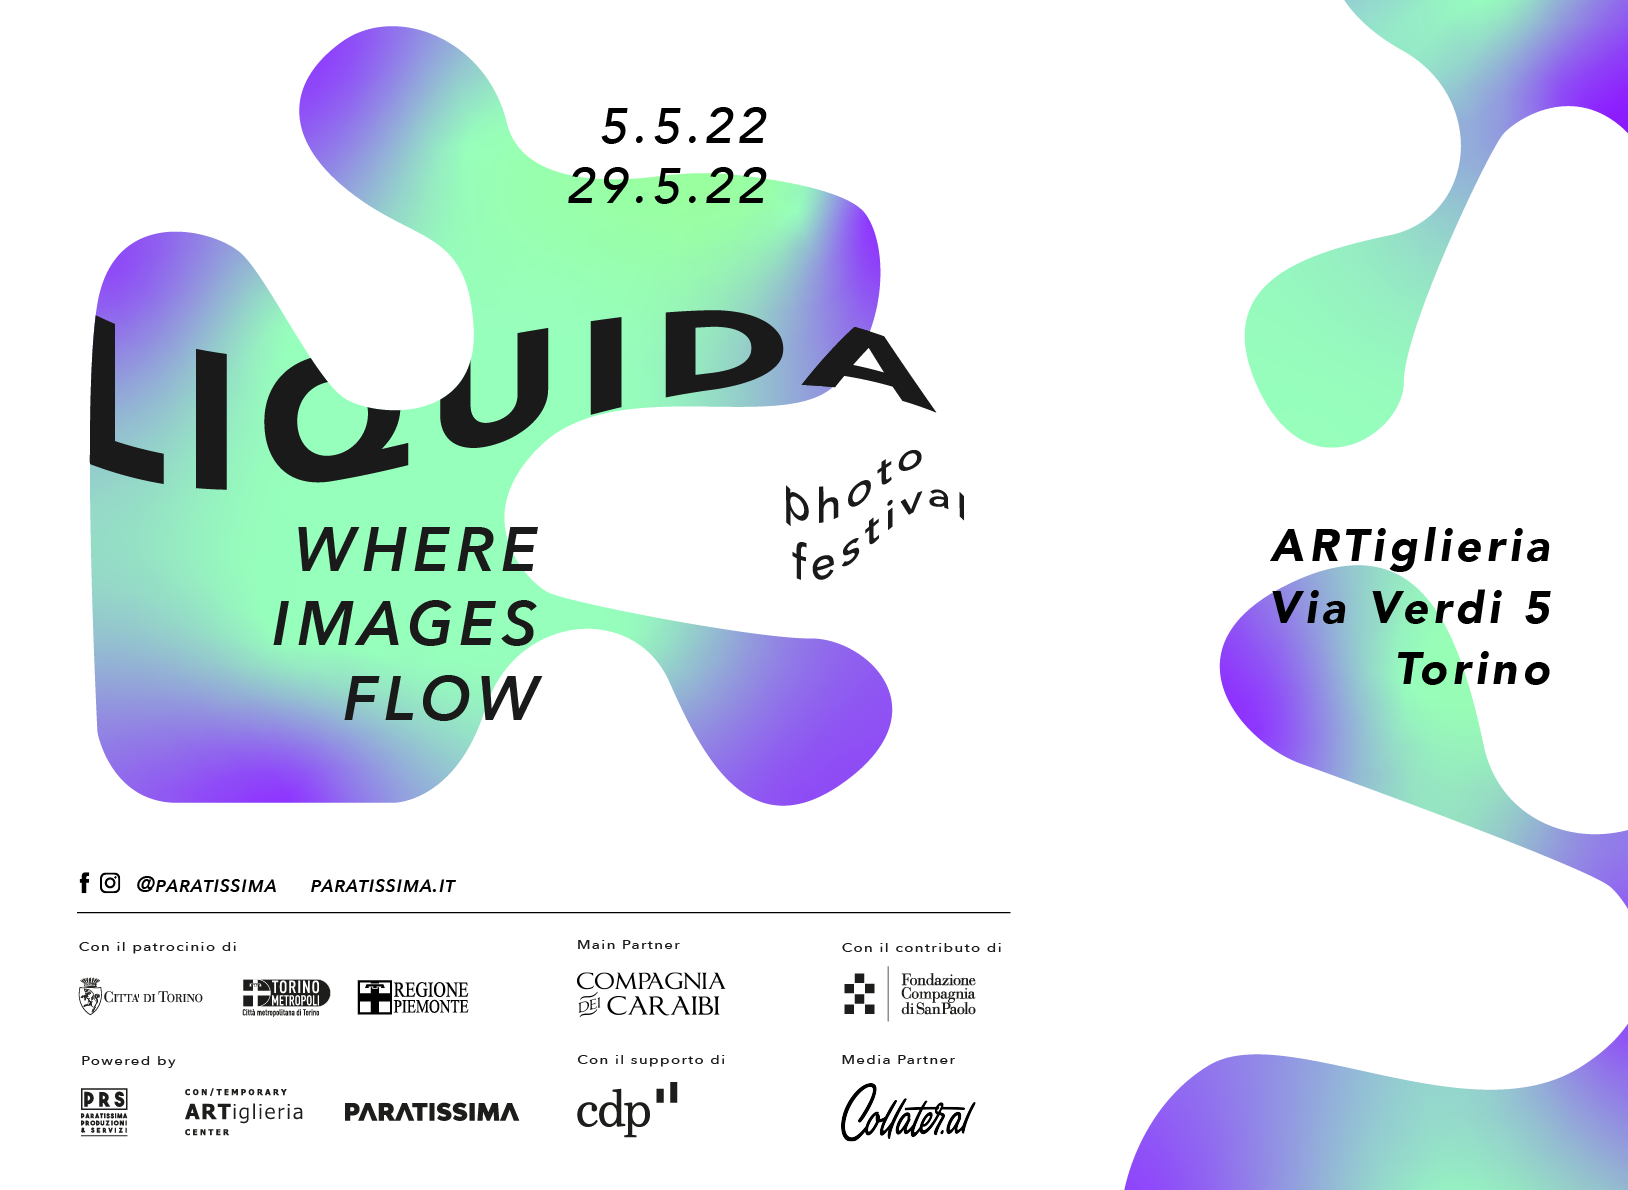 Liquida Photofestival – Where Images Flow